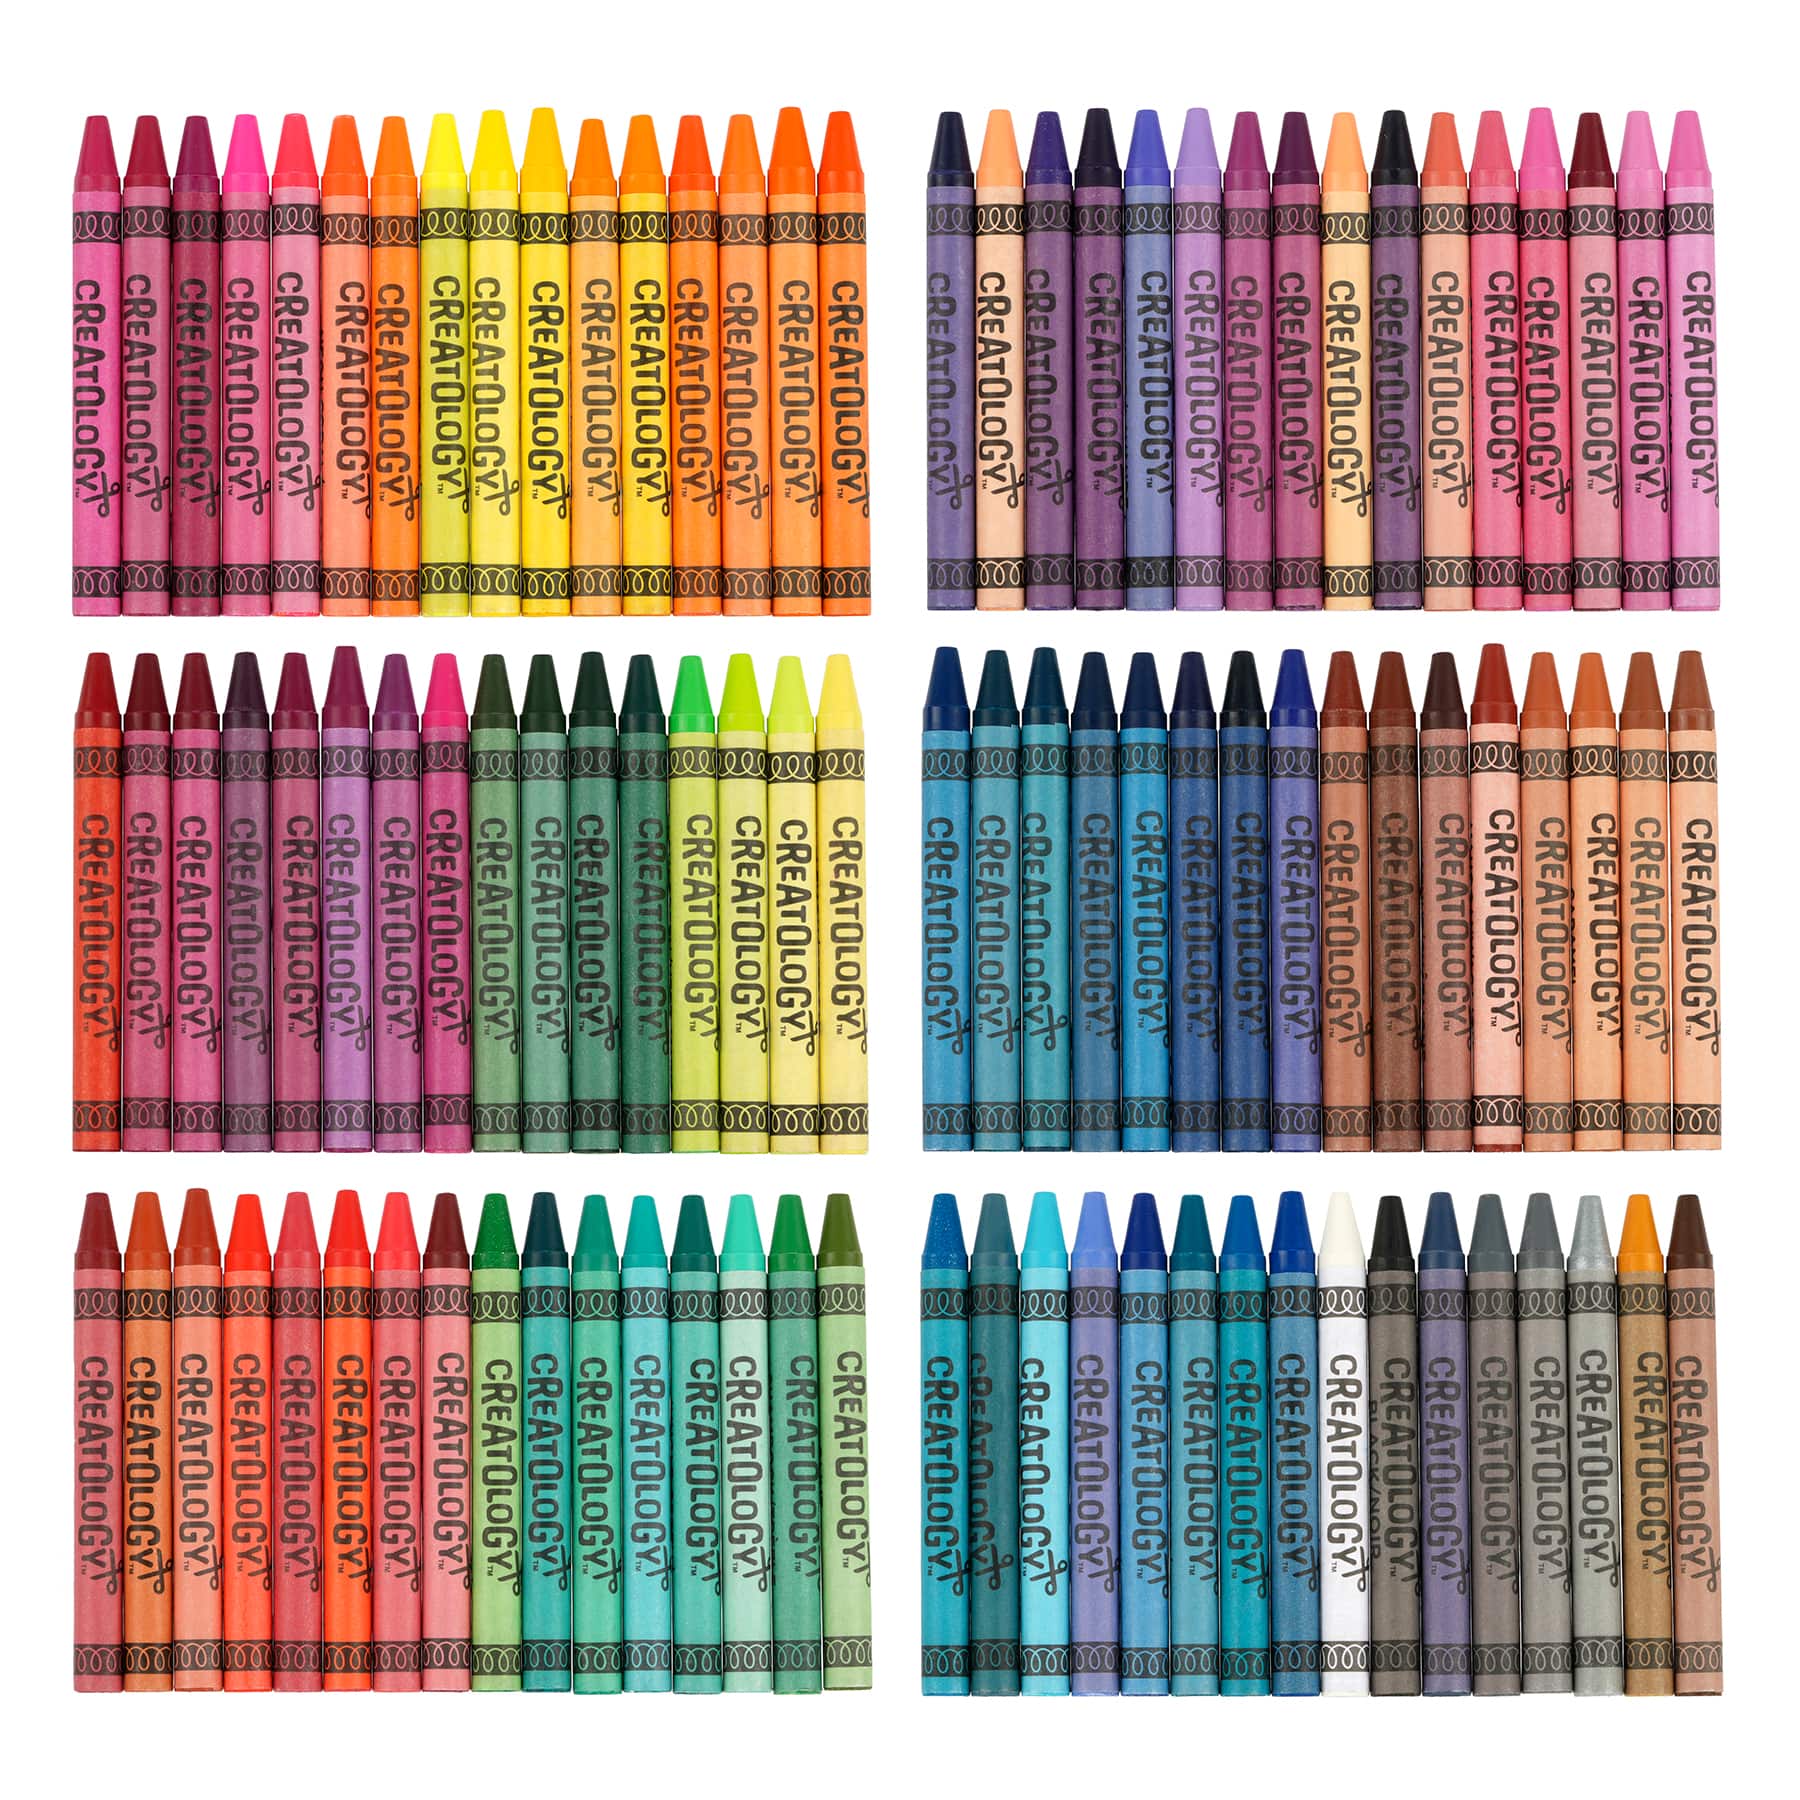 Crayola Crayons 96ct Art Department LLC